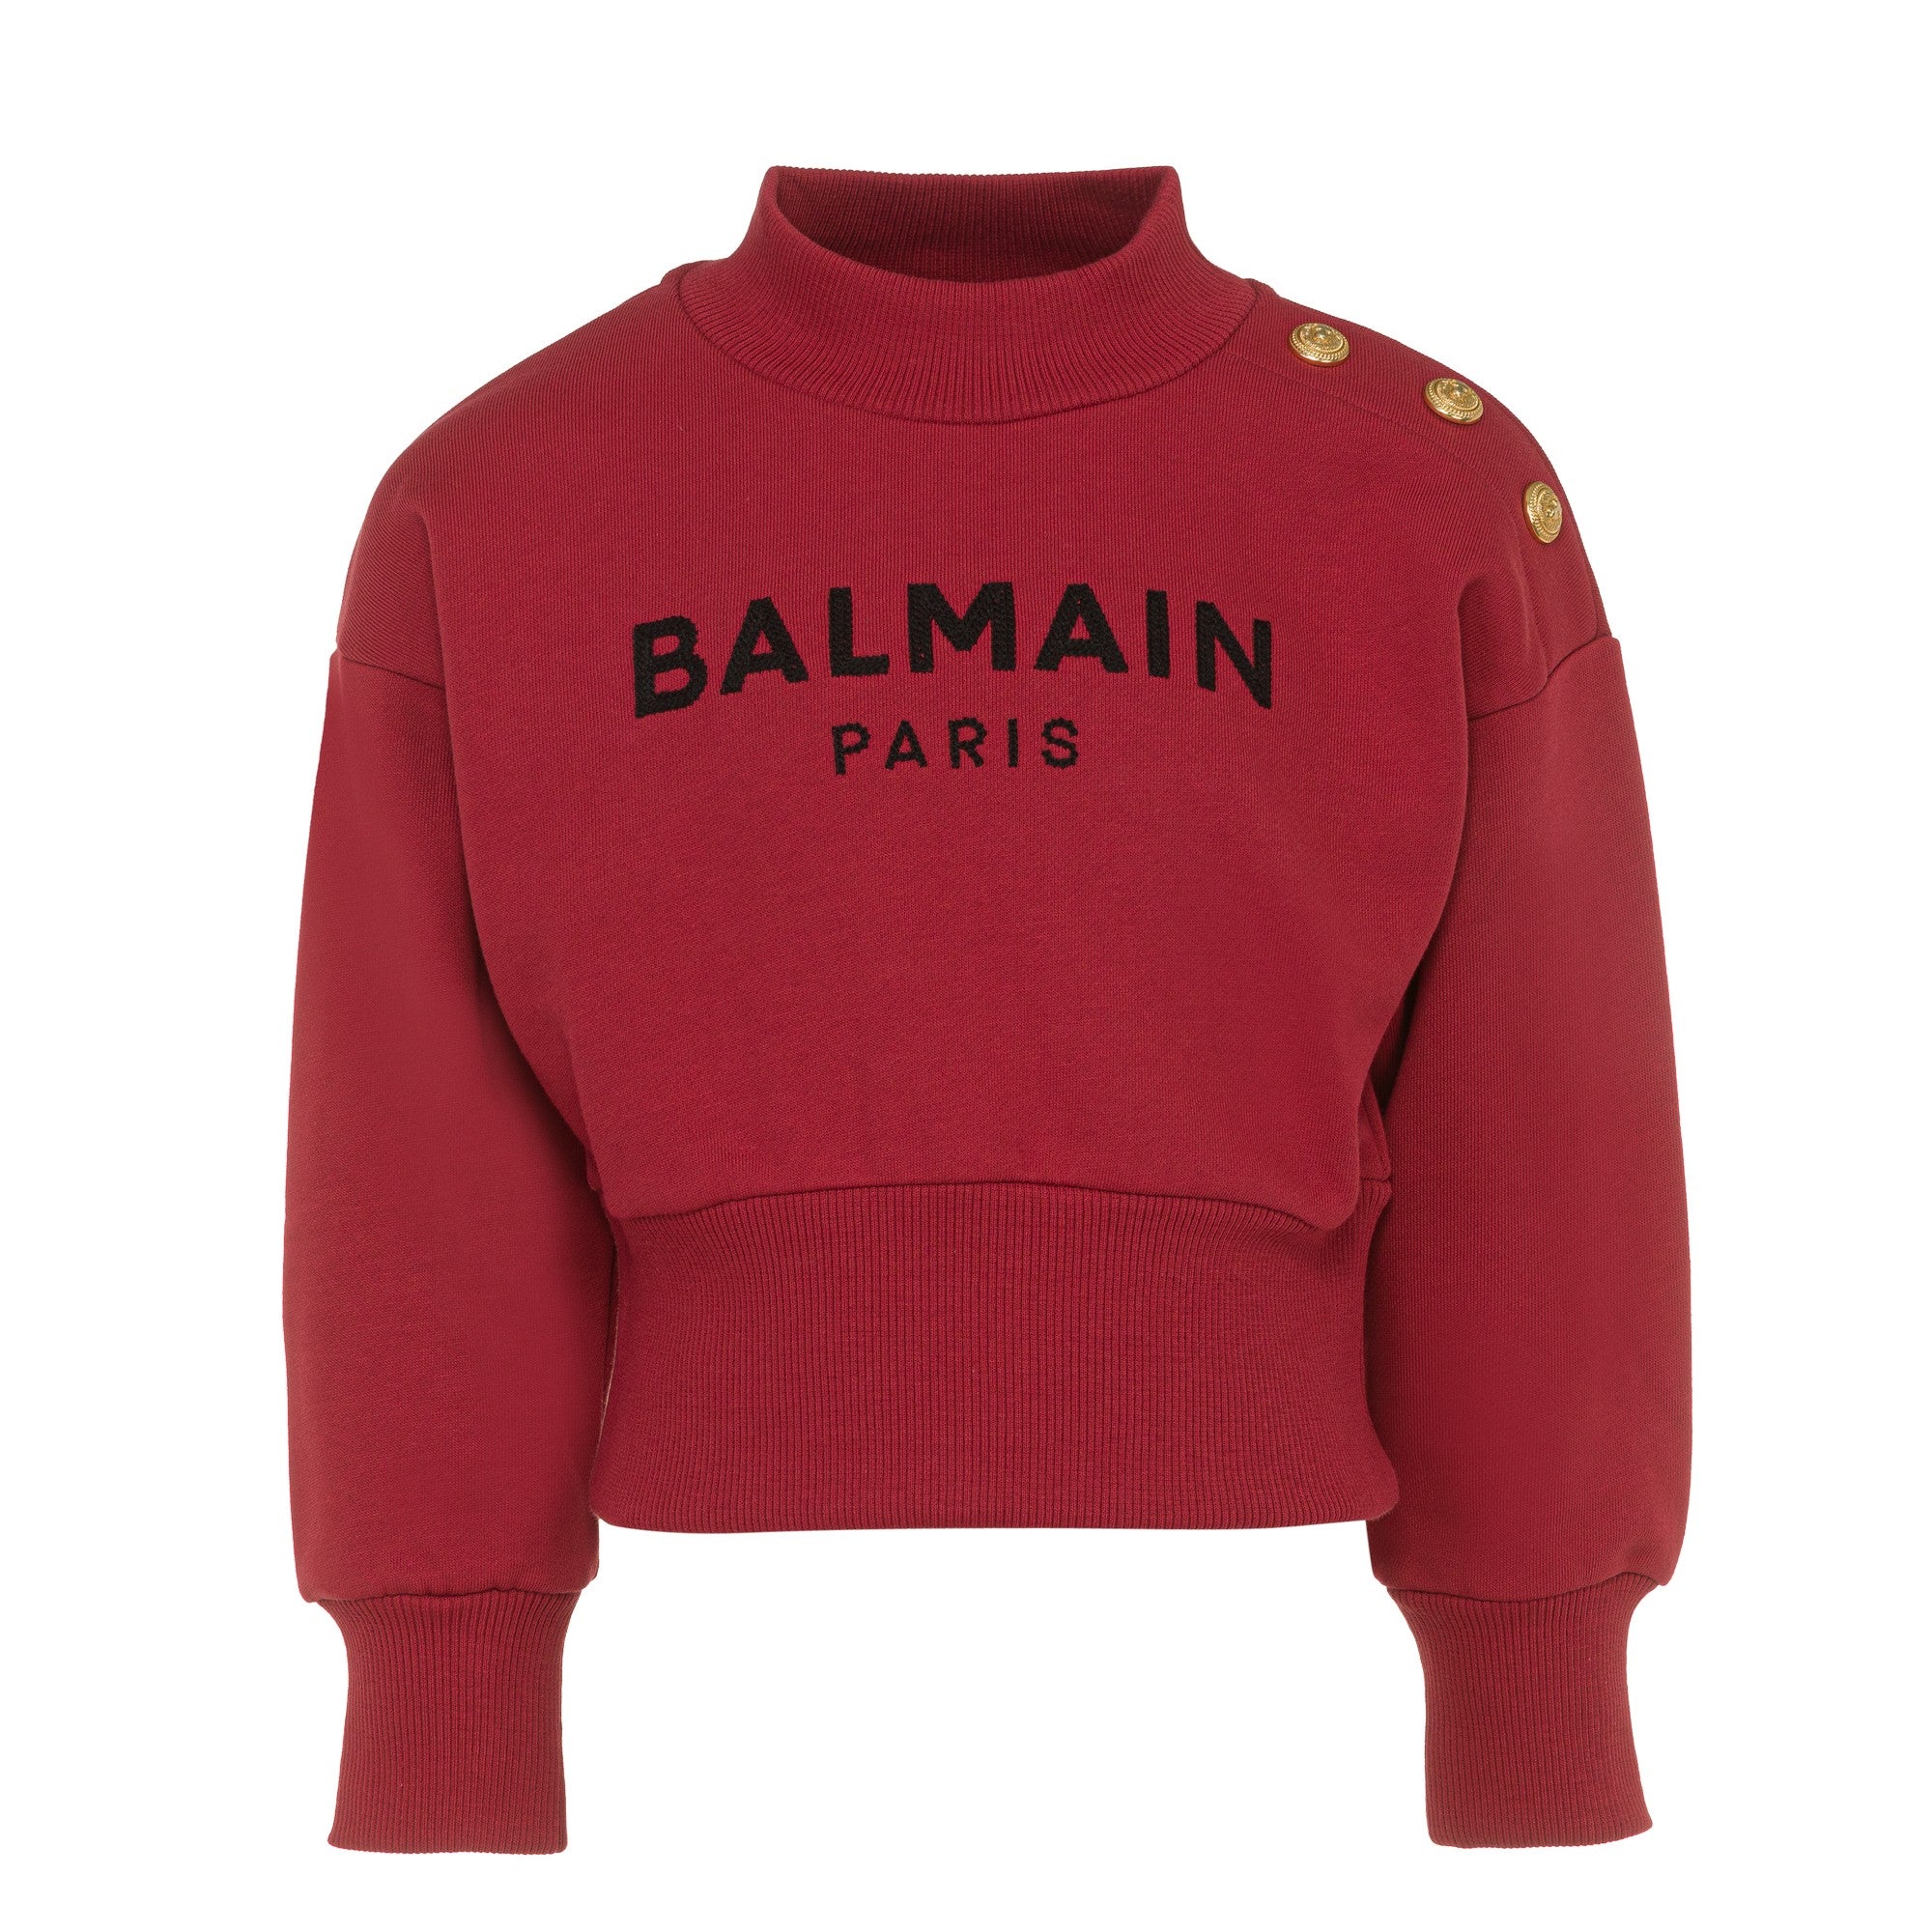 Balmain Red Sweater